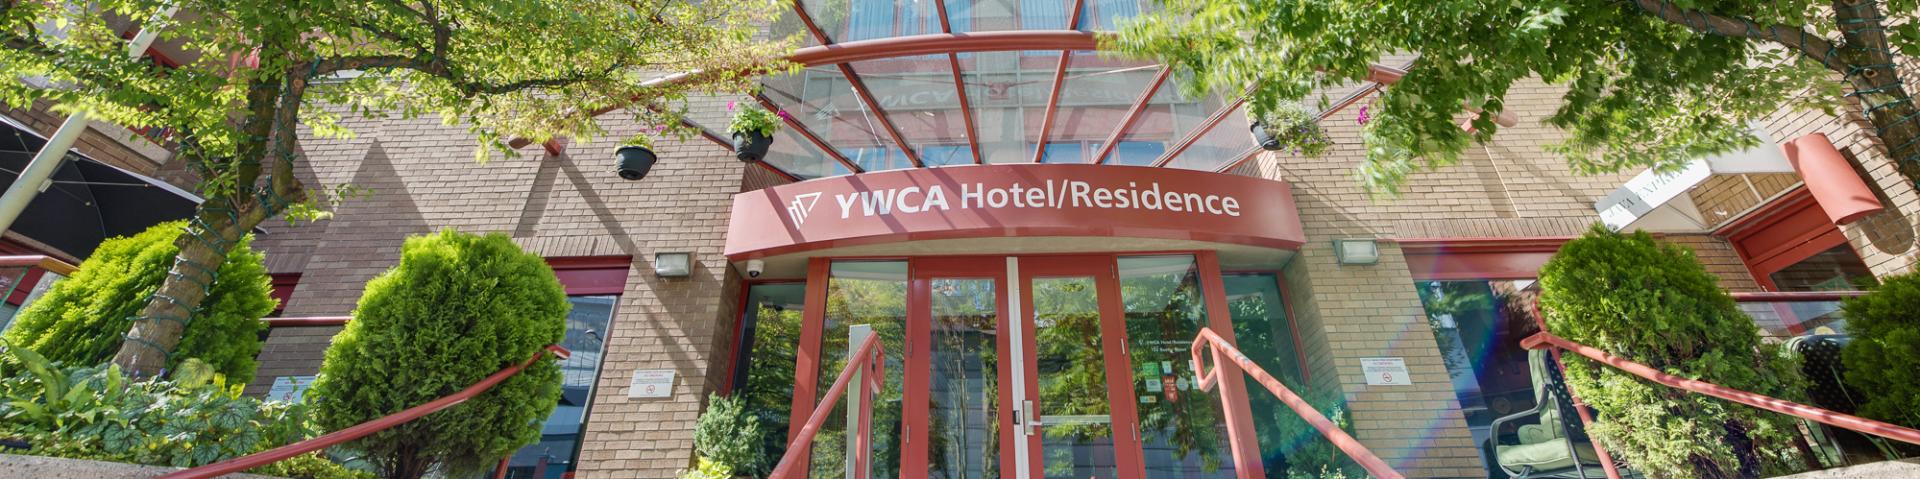 YWCA Hotel outside